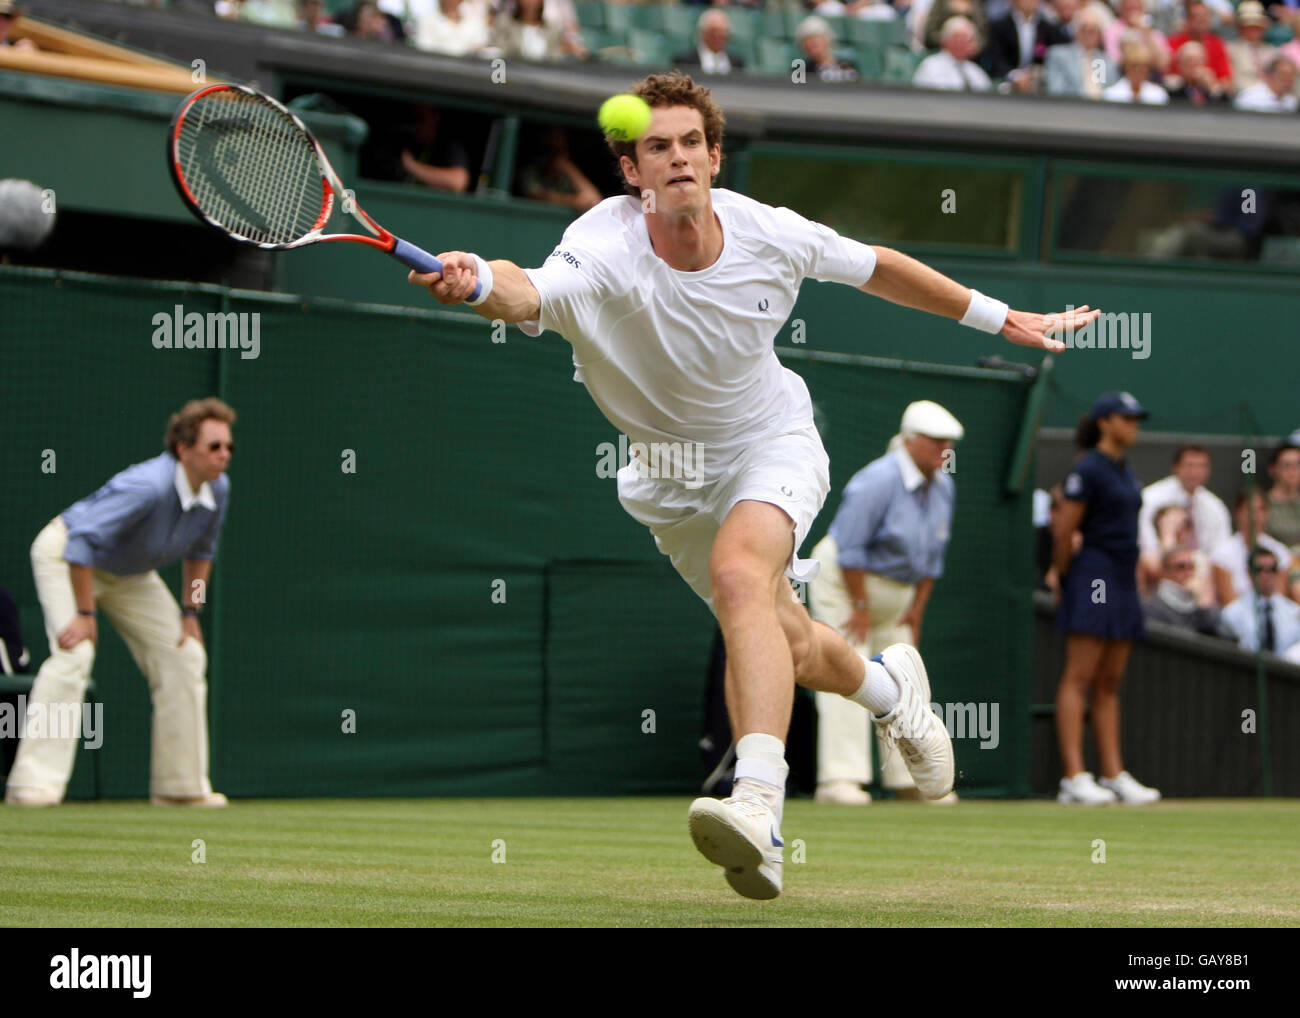 Der britische Andy Murray im All England Tennis Club in Wimbledon gegen den belgischen Xavier Malisse bei den Wimbledon Championships 2008. Stockfoto